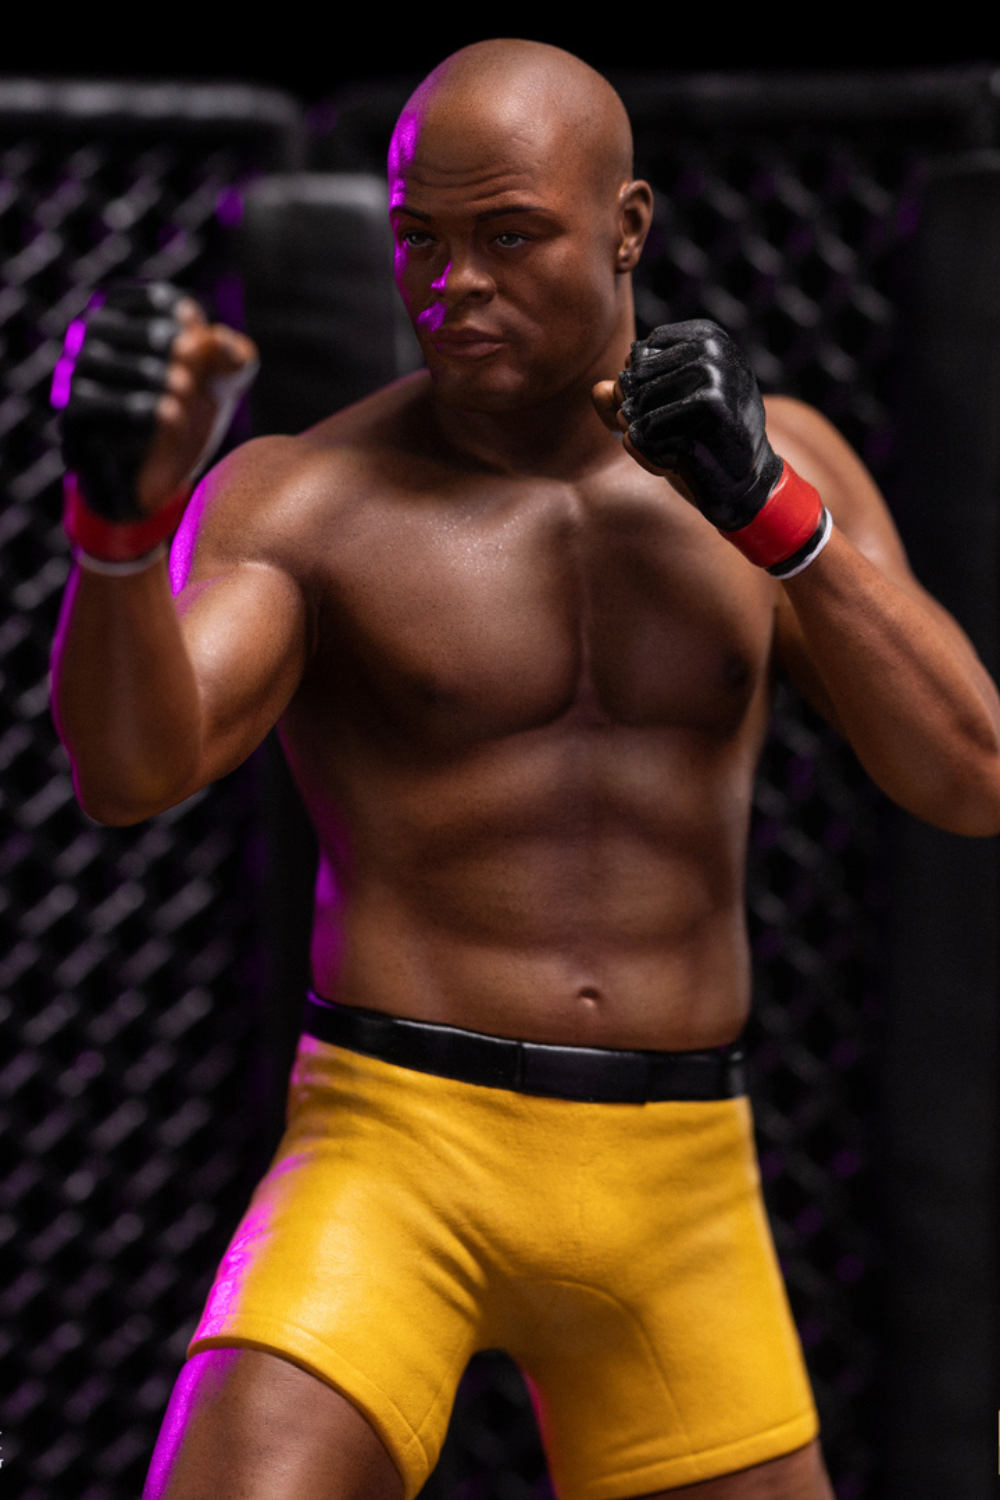 Anderson Silva, Former Brazilian Mixed Martial Artist And Boxer